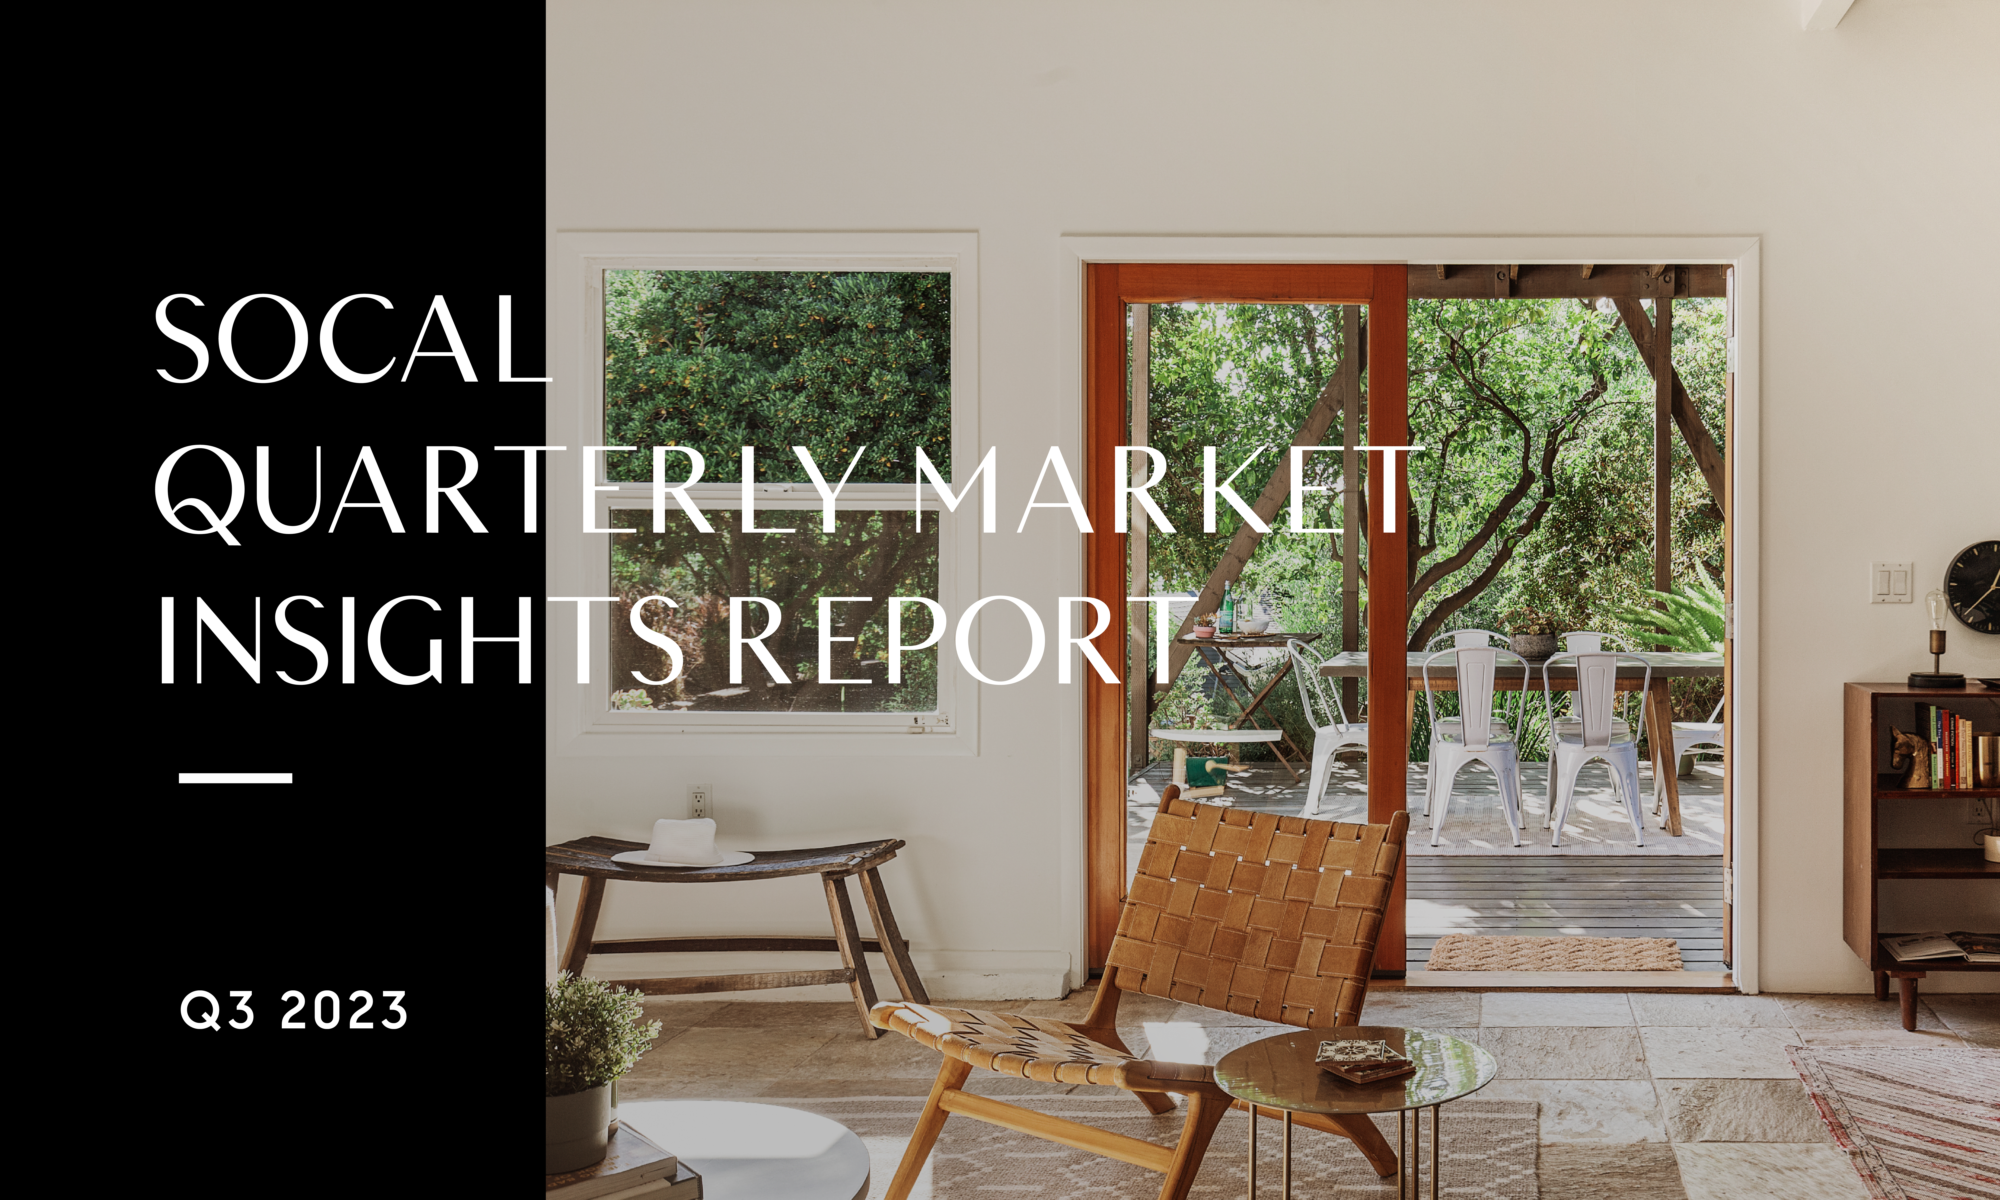 SoCal Quarterly Market Insights Report: Q3 2023